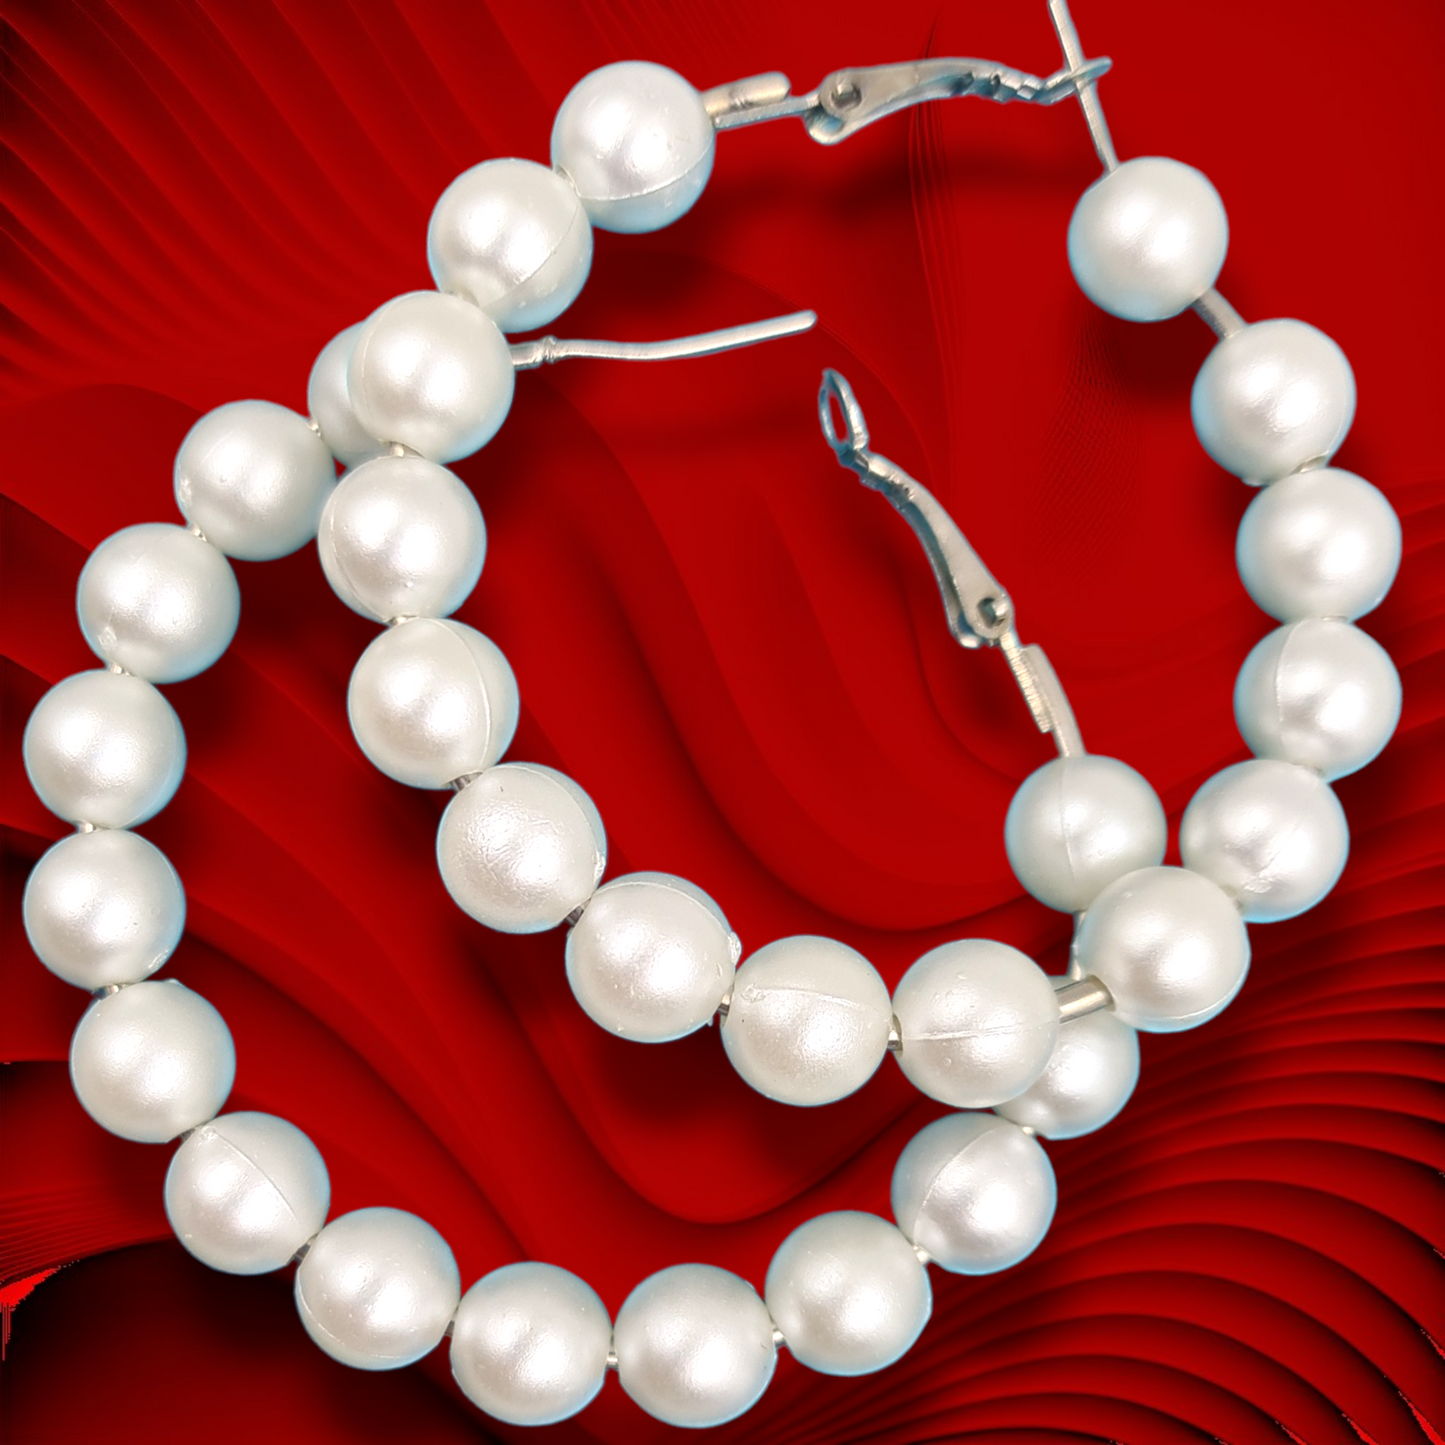 "Pearlescent Delight: Plastic Pearl Earrings"